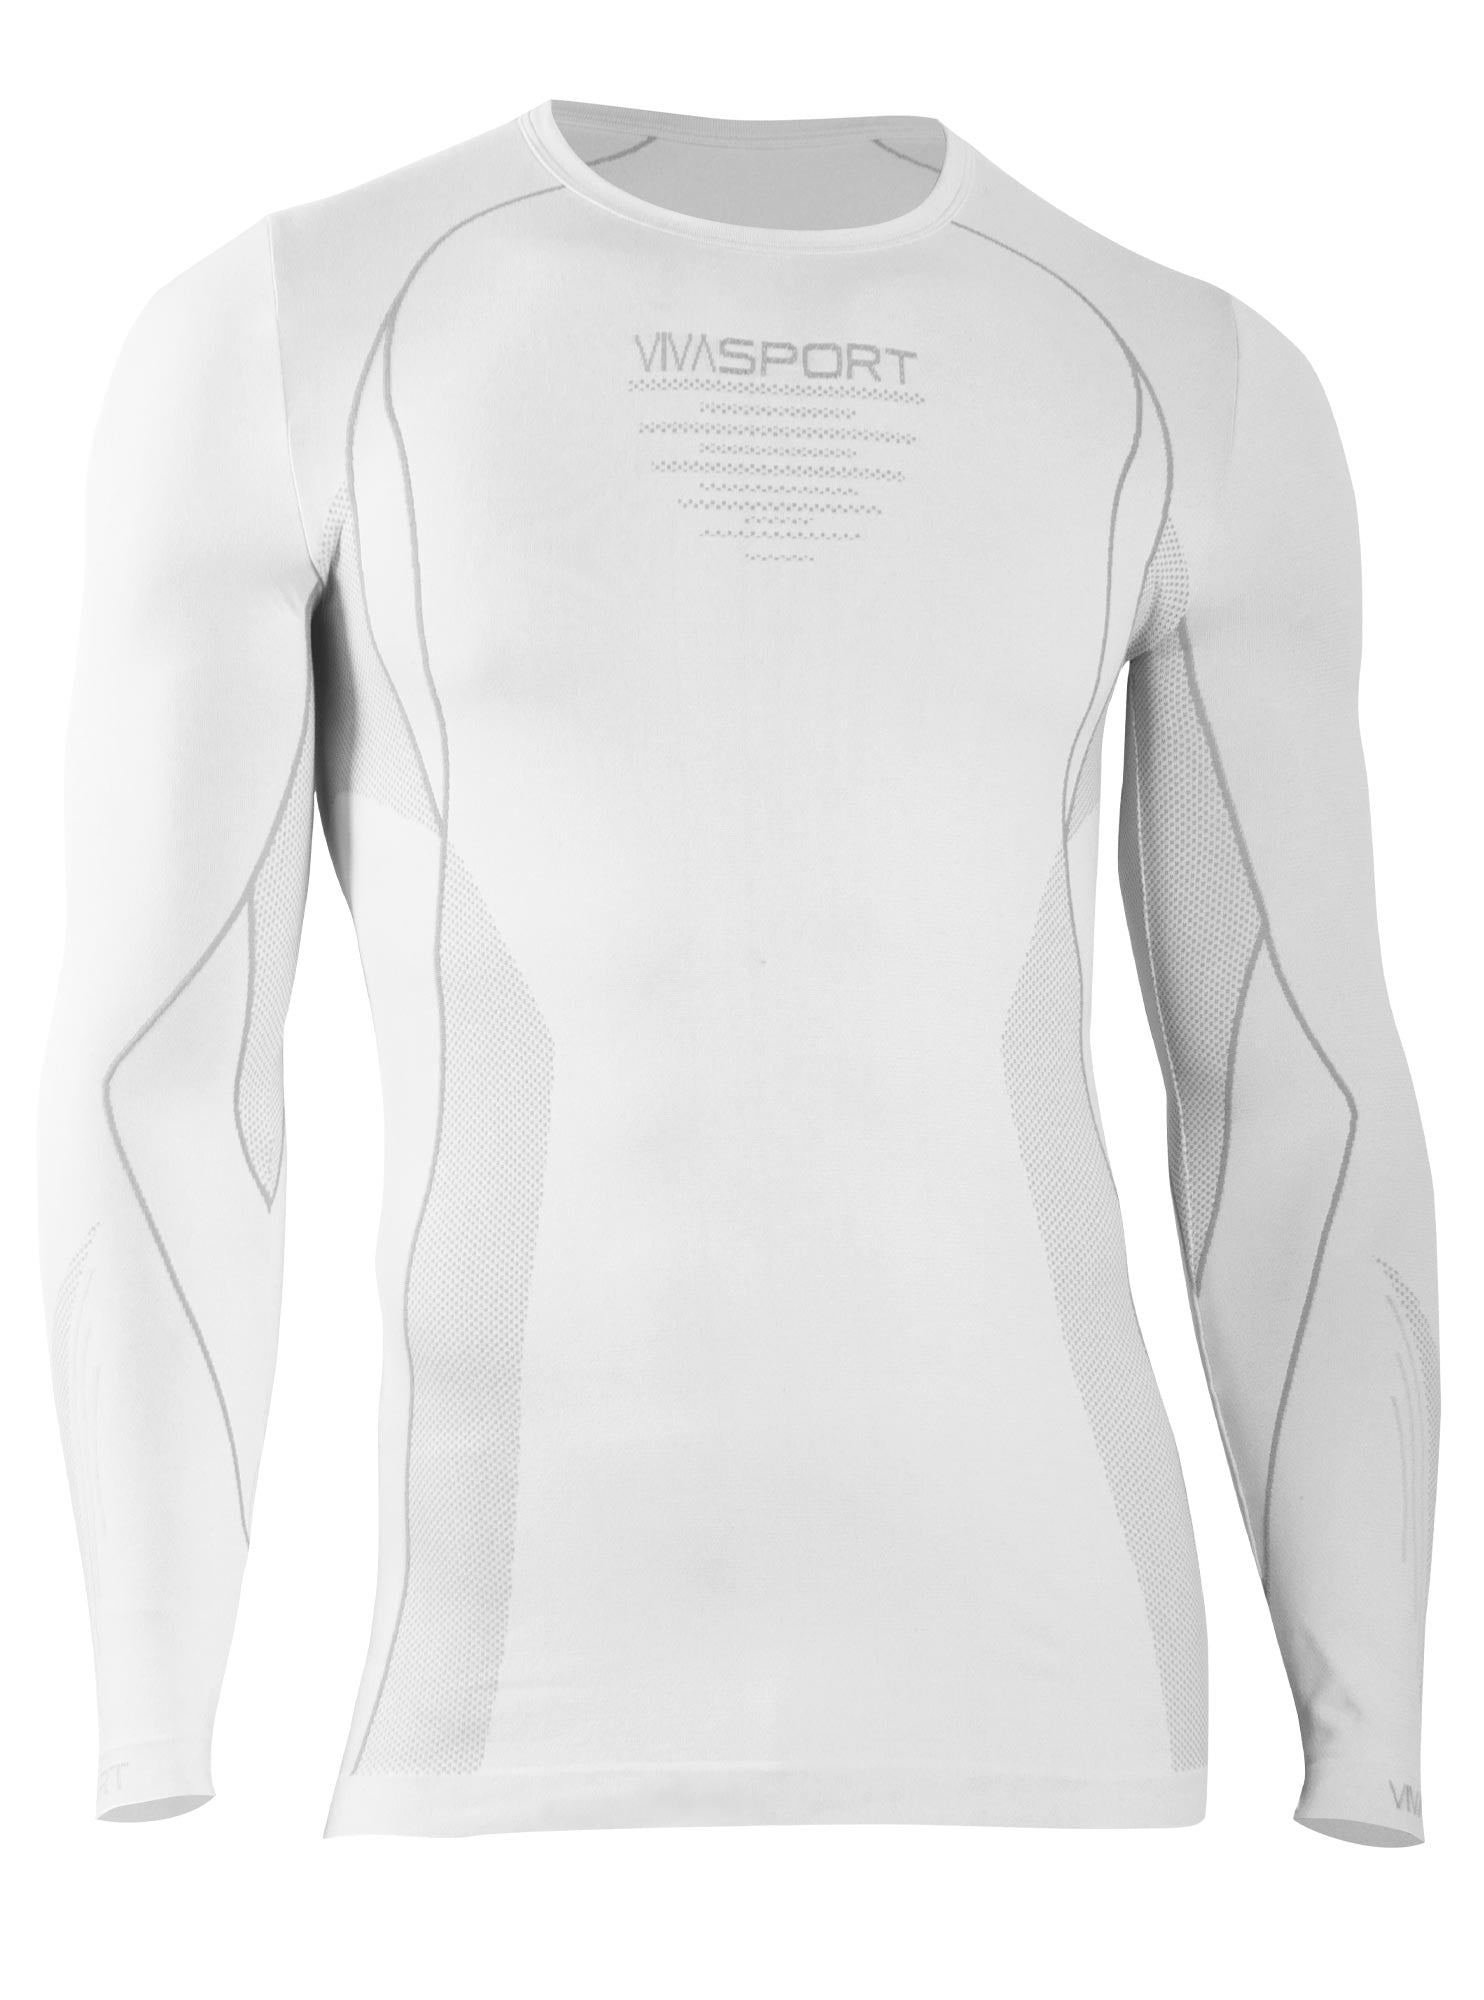 Vivasport Breathable Thermal Long Sleeve Crew Neck Shirt 201906 white grey 